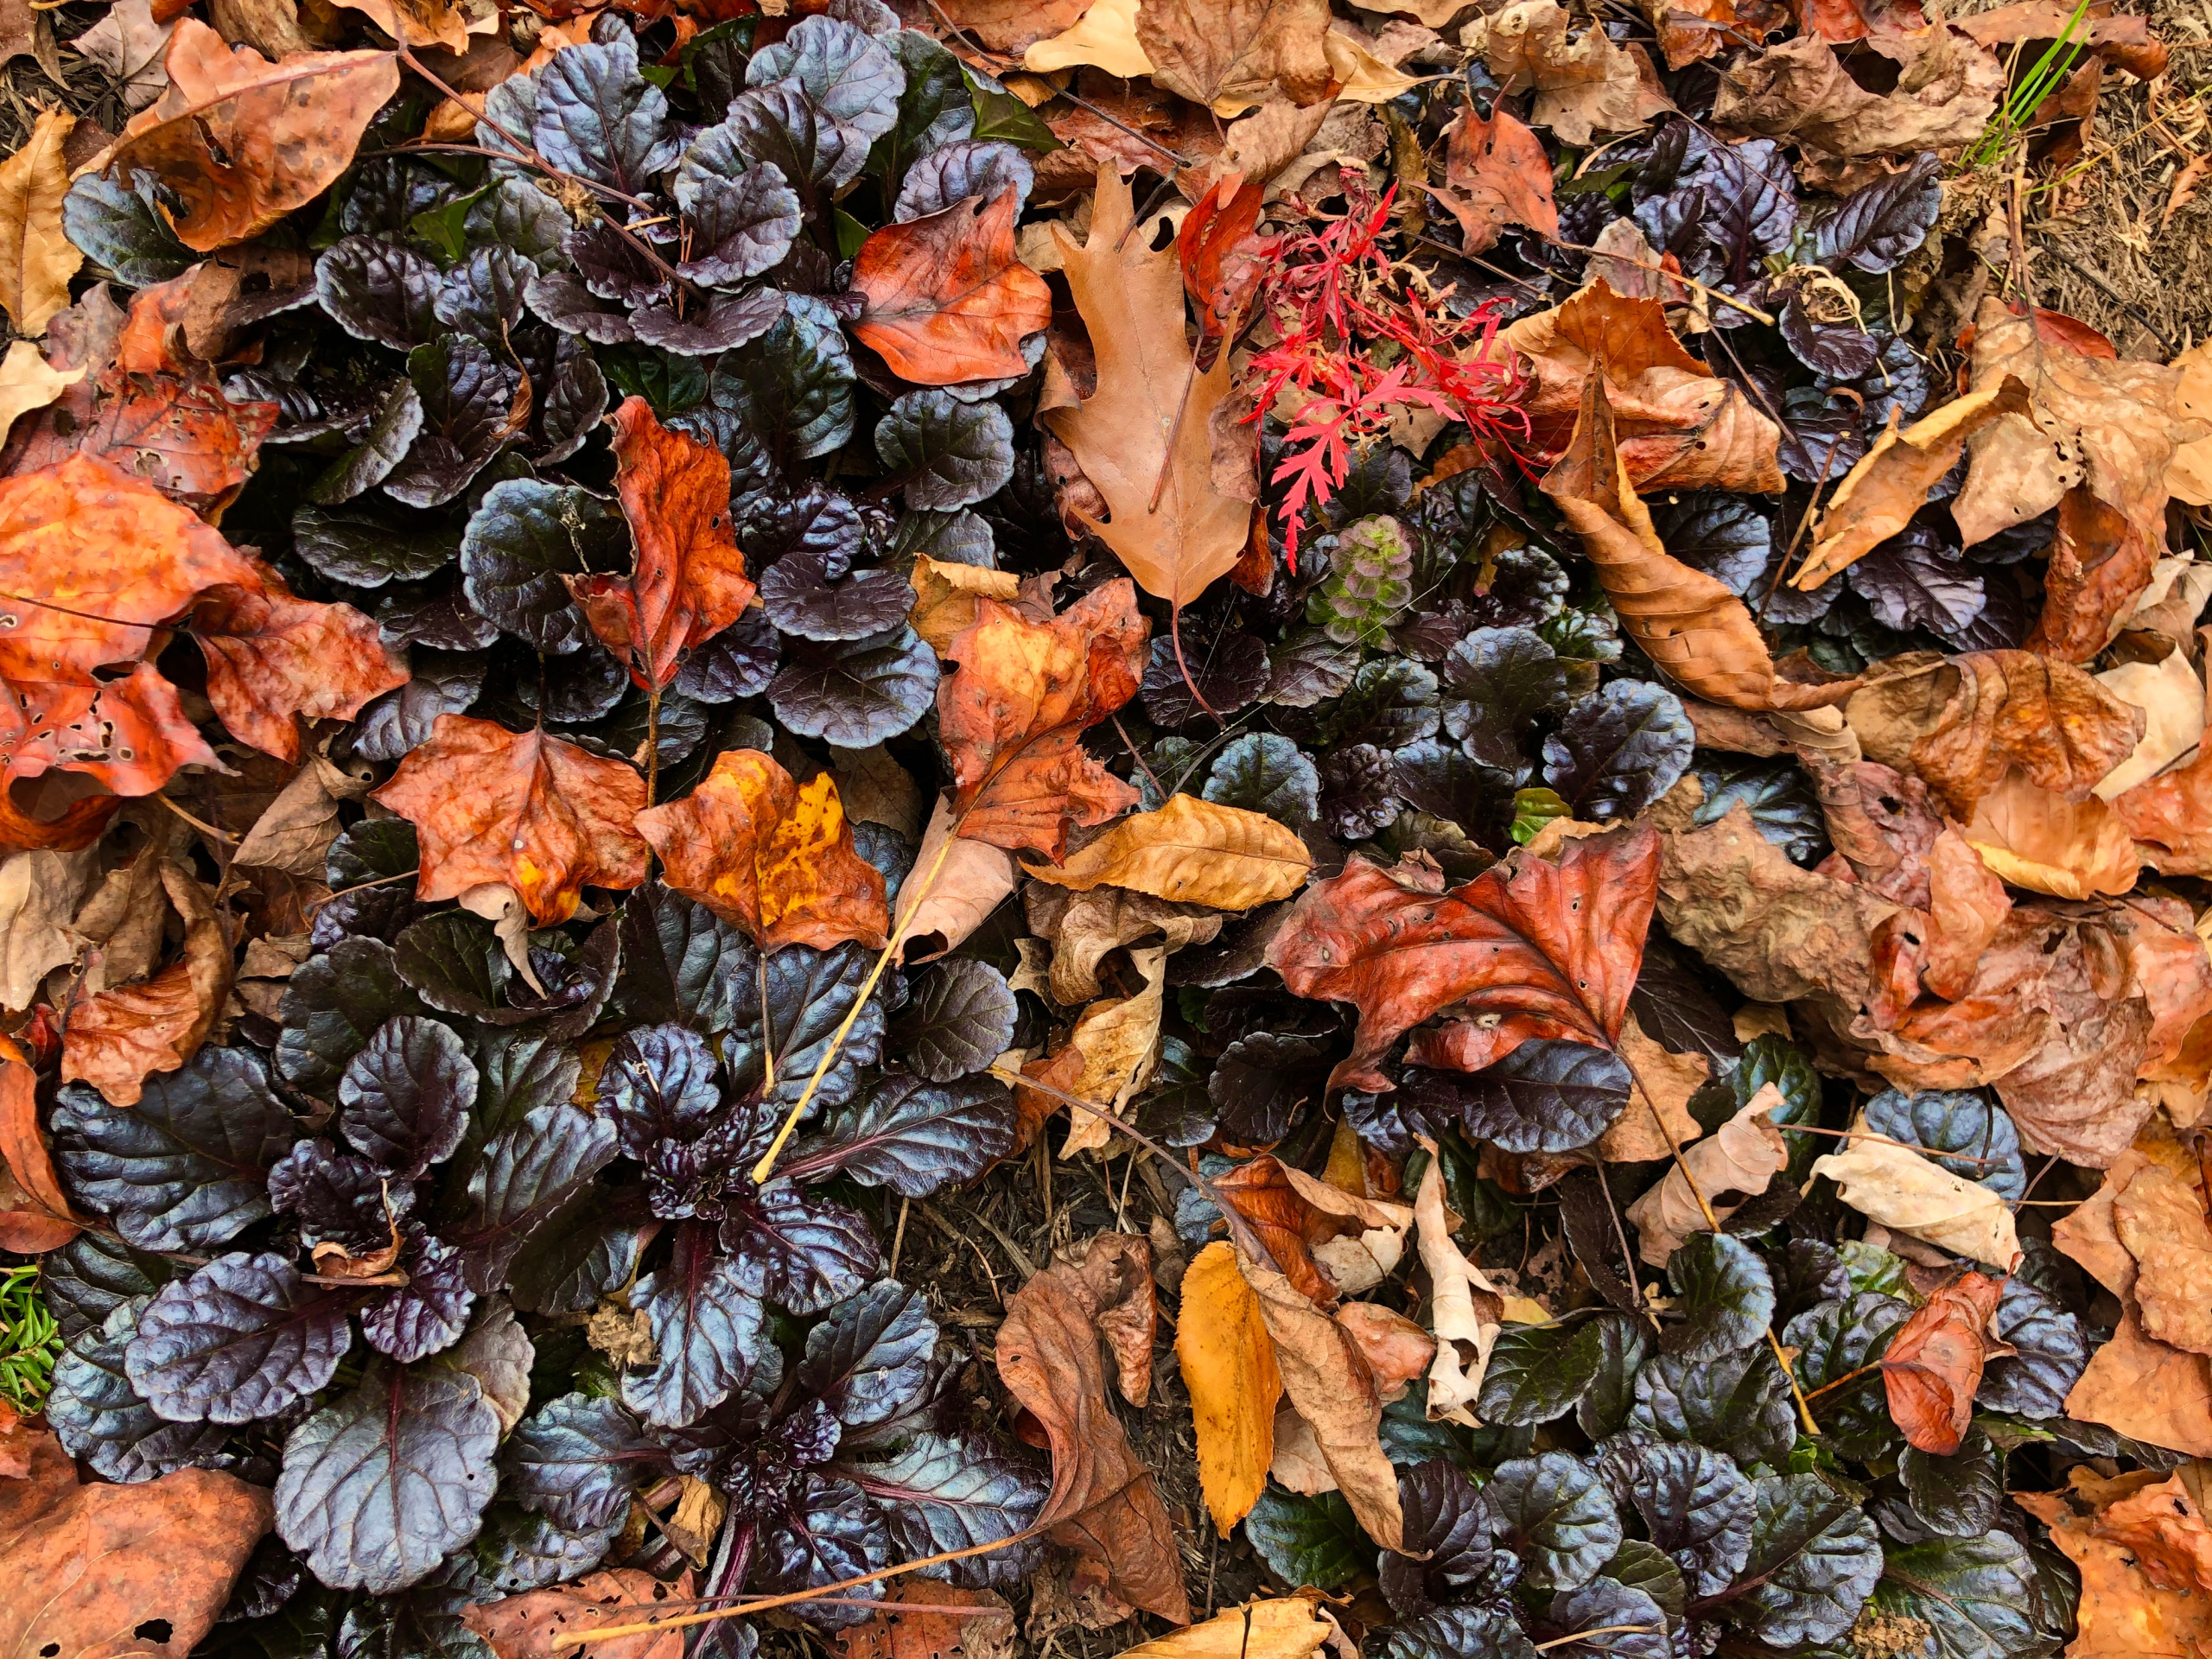 'Black Scallop' ajuga meets fallen leaves